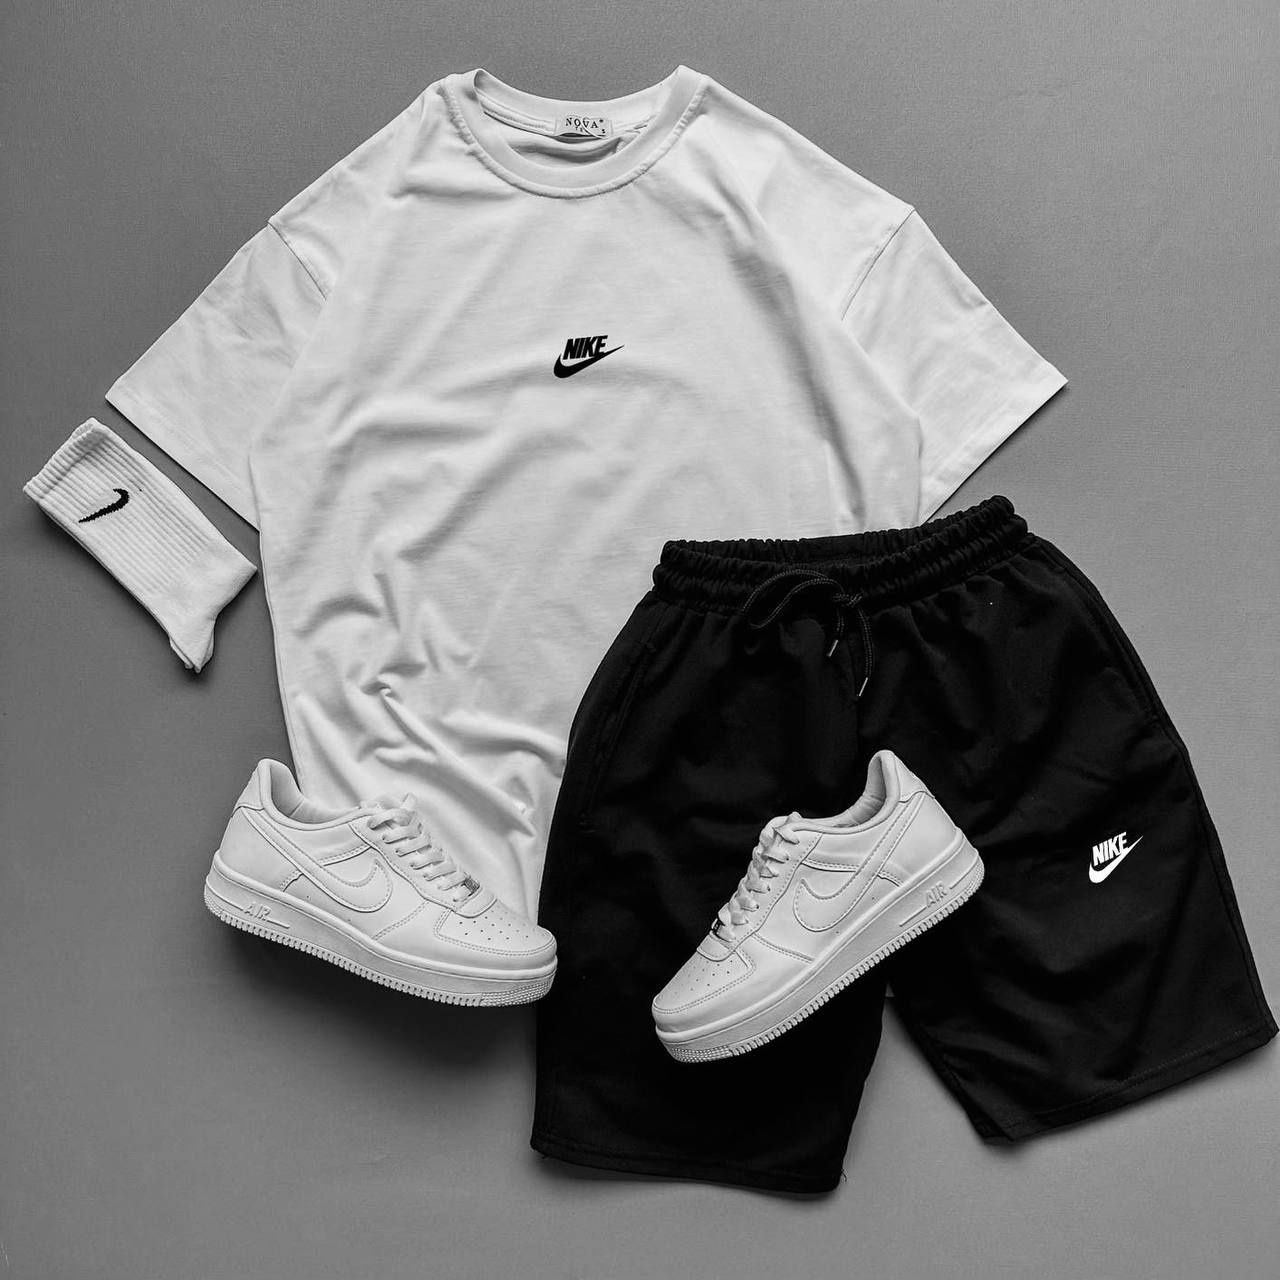 Мужские шорты и футболка Nike Найк белый черный чоловічий спортивний